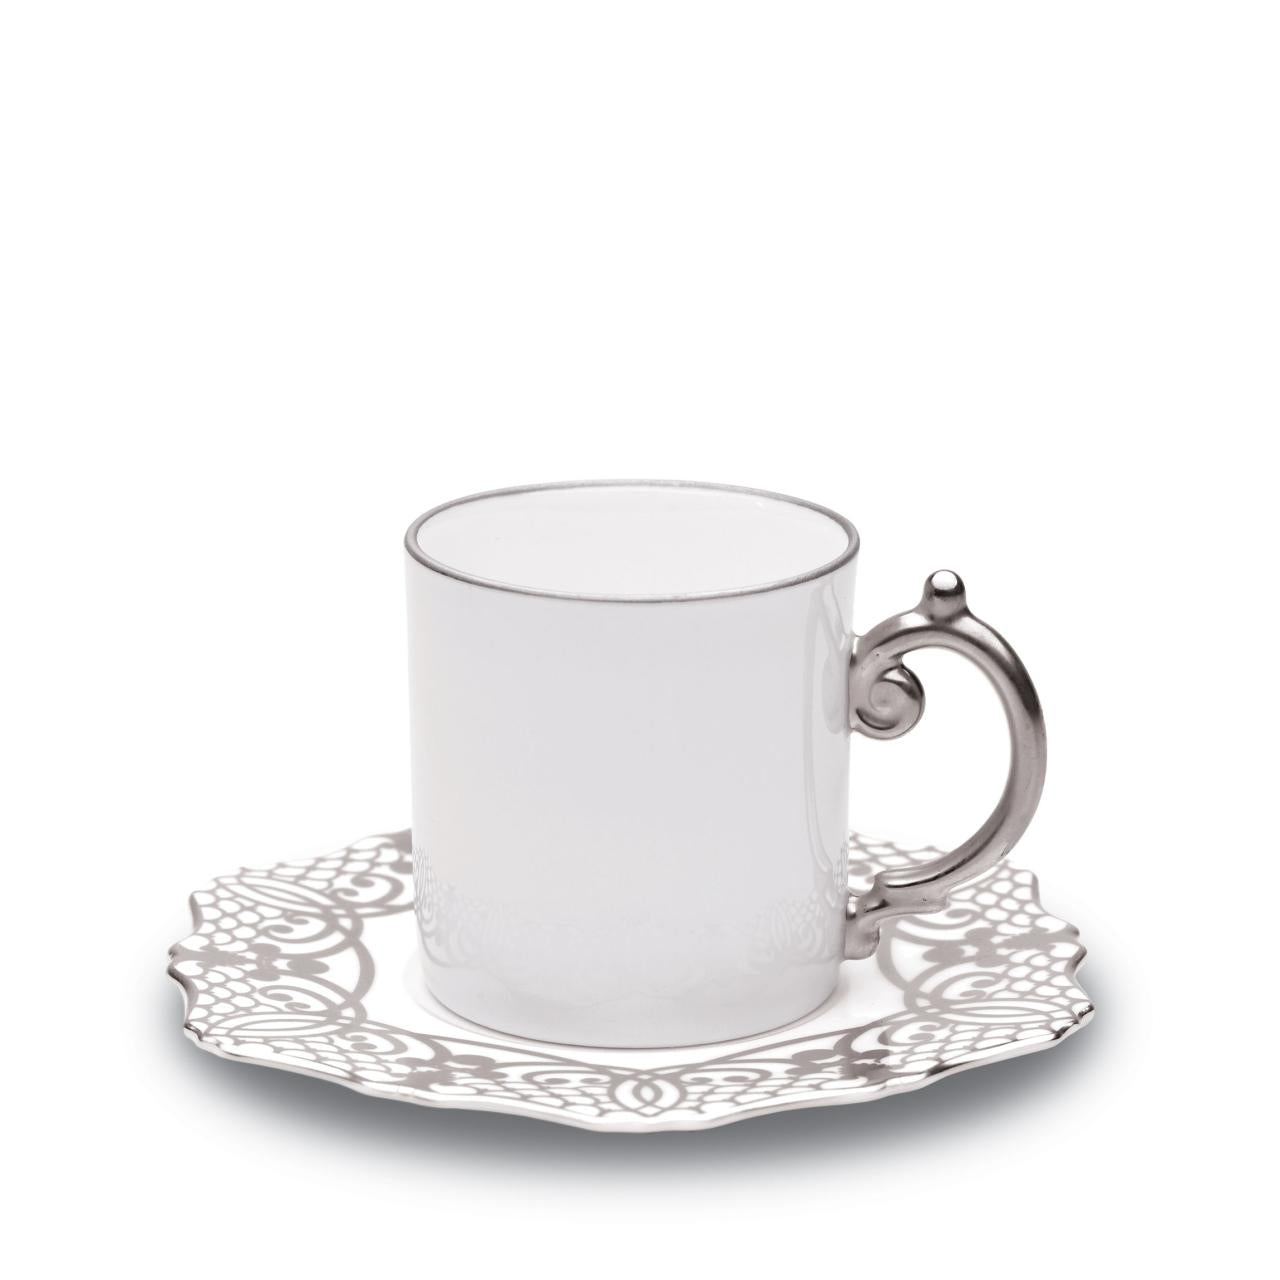 Alencon Silver Espresso Cup & Saucer - RSVP Style